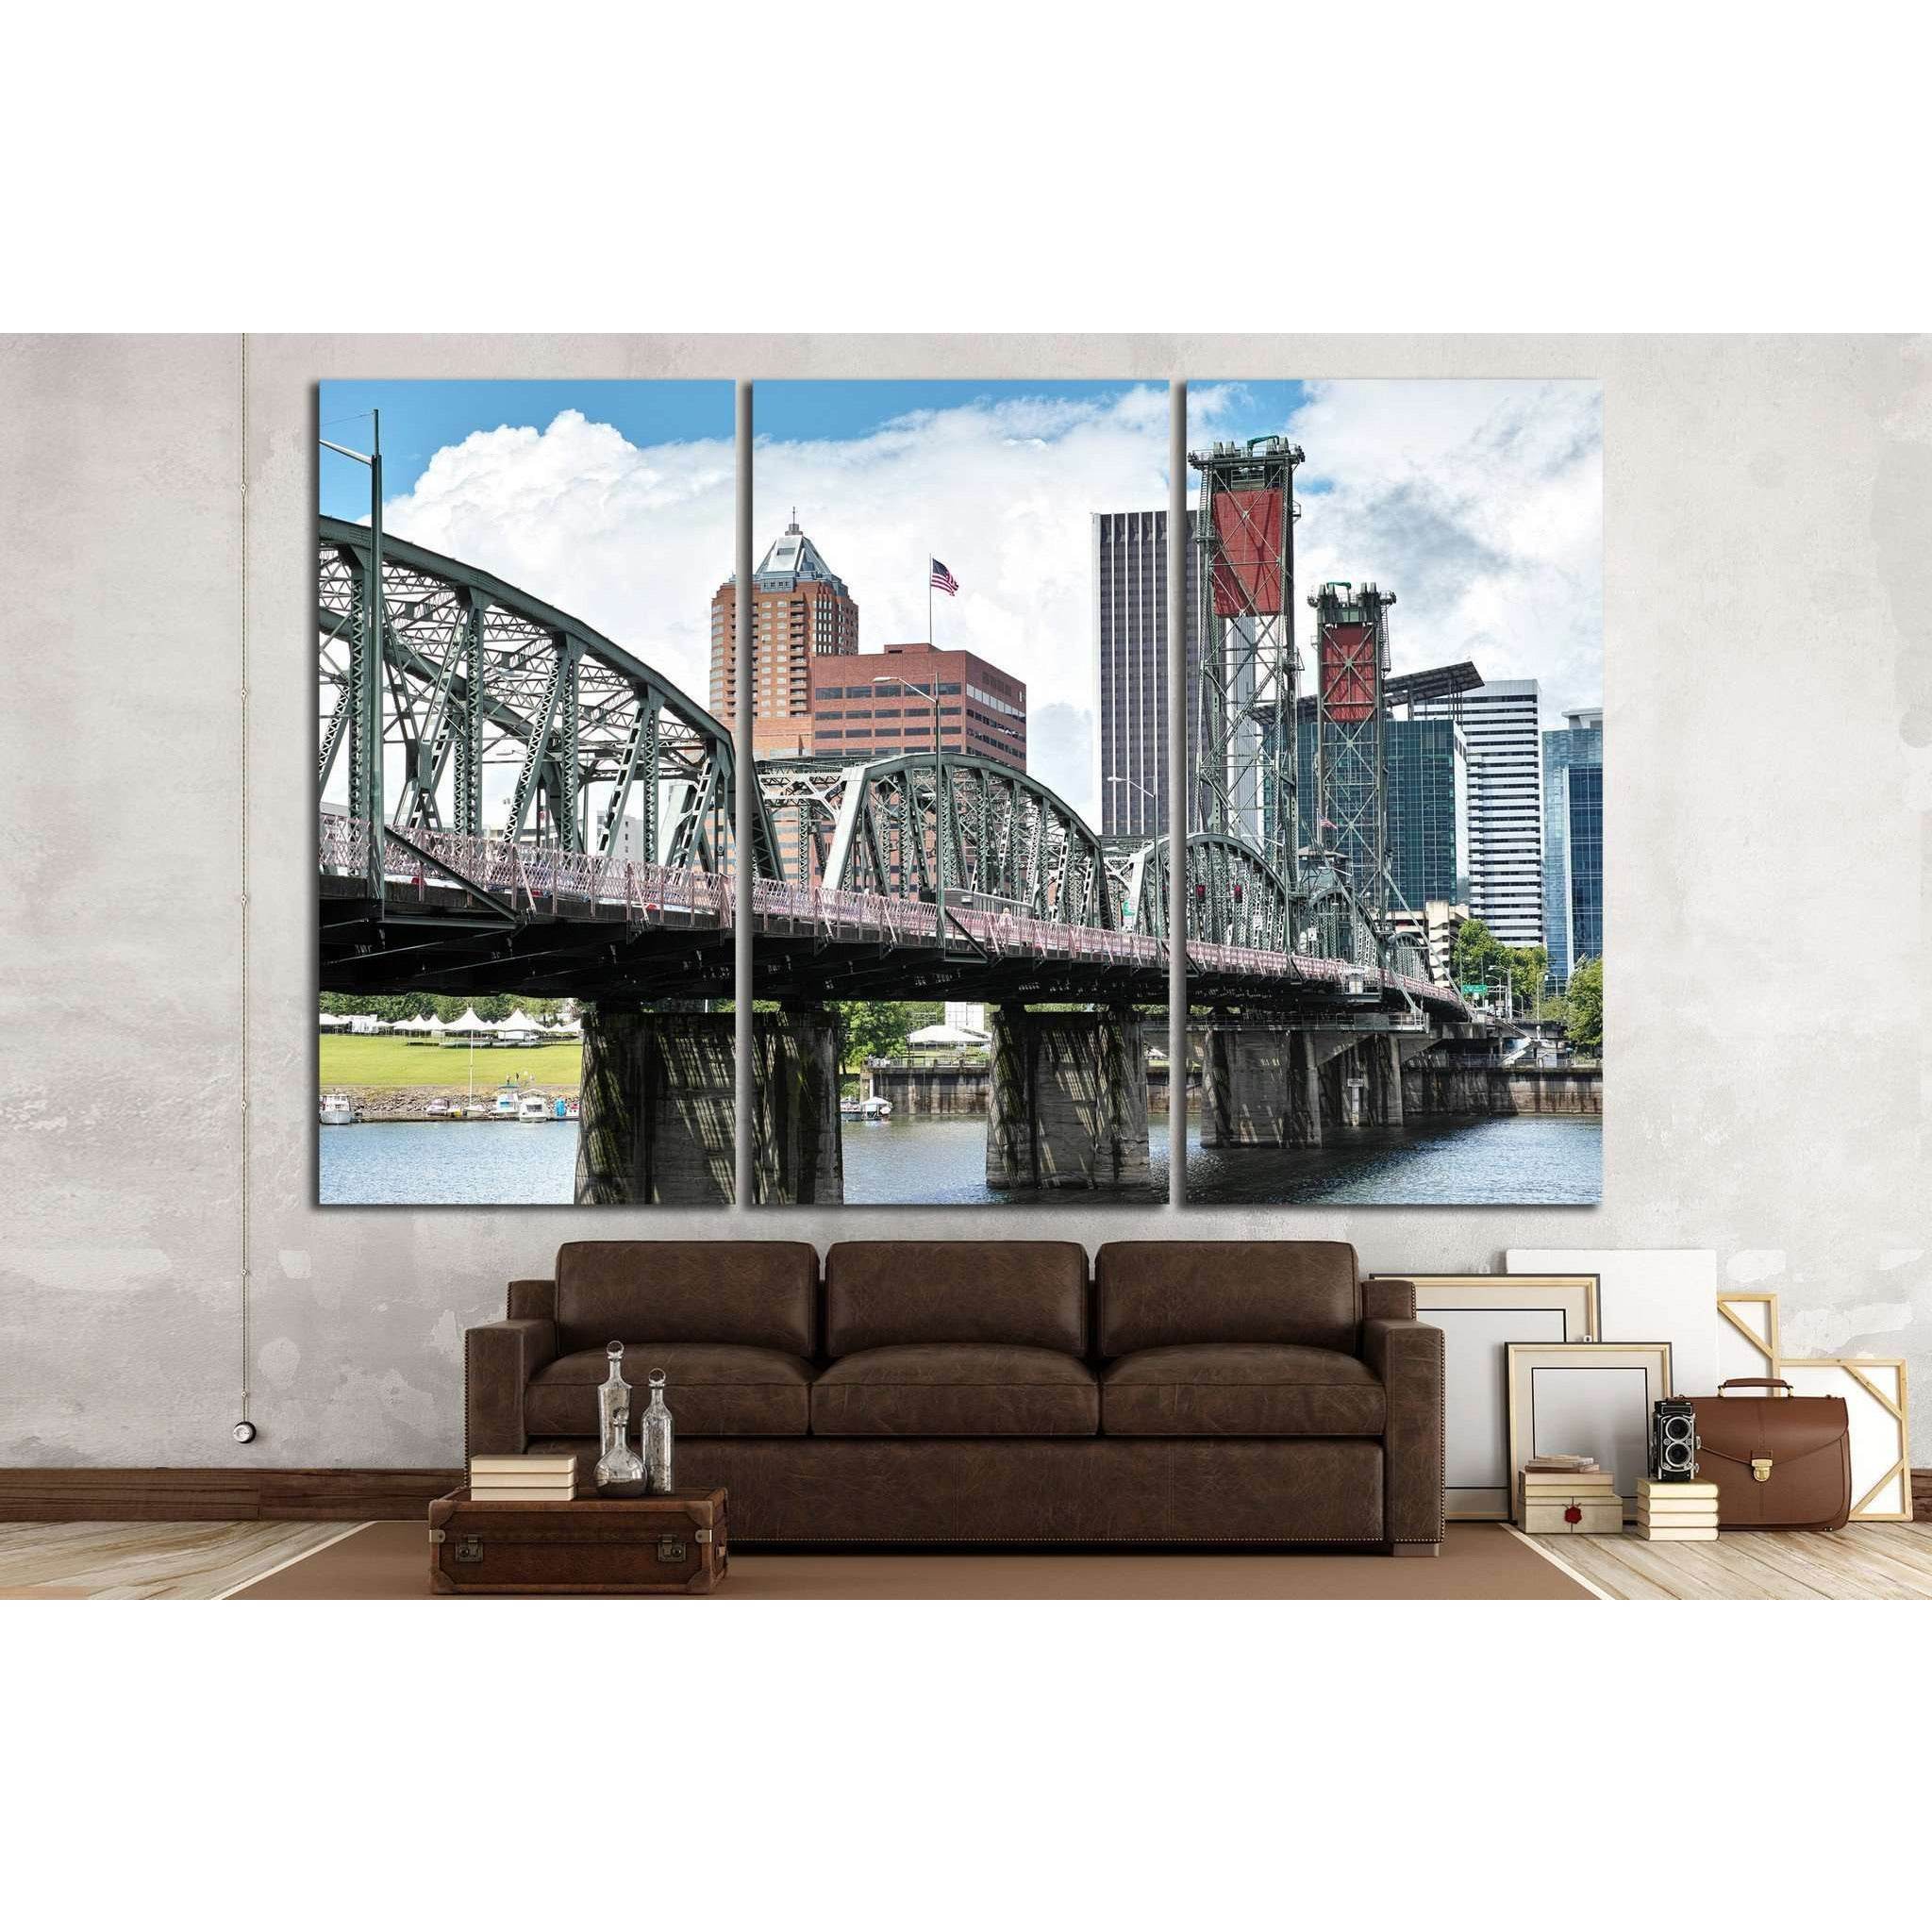 Hawthorn bridge, Portland, Oregon №796 Ready to Hang Canvas Print